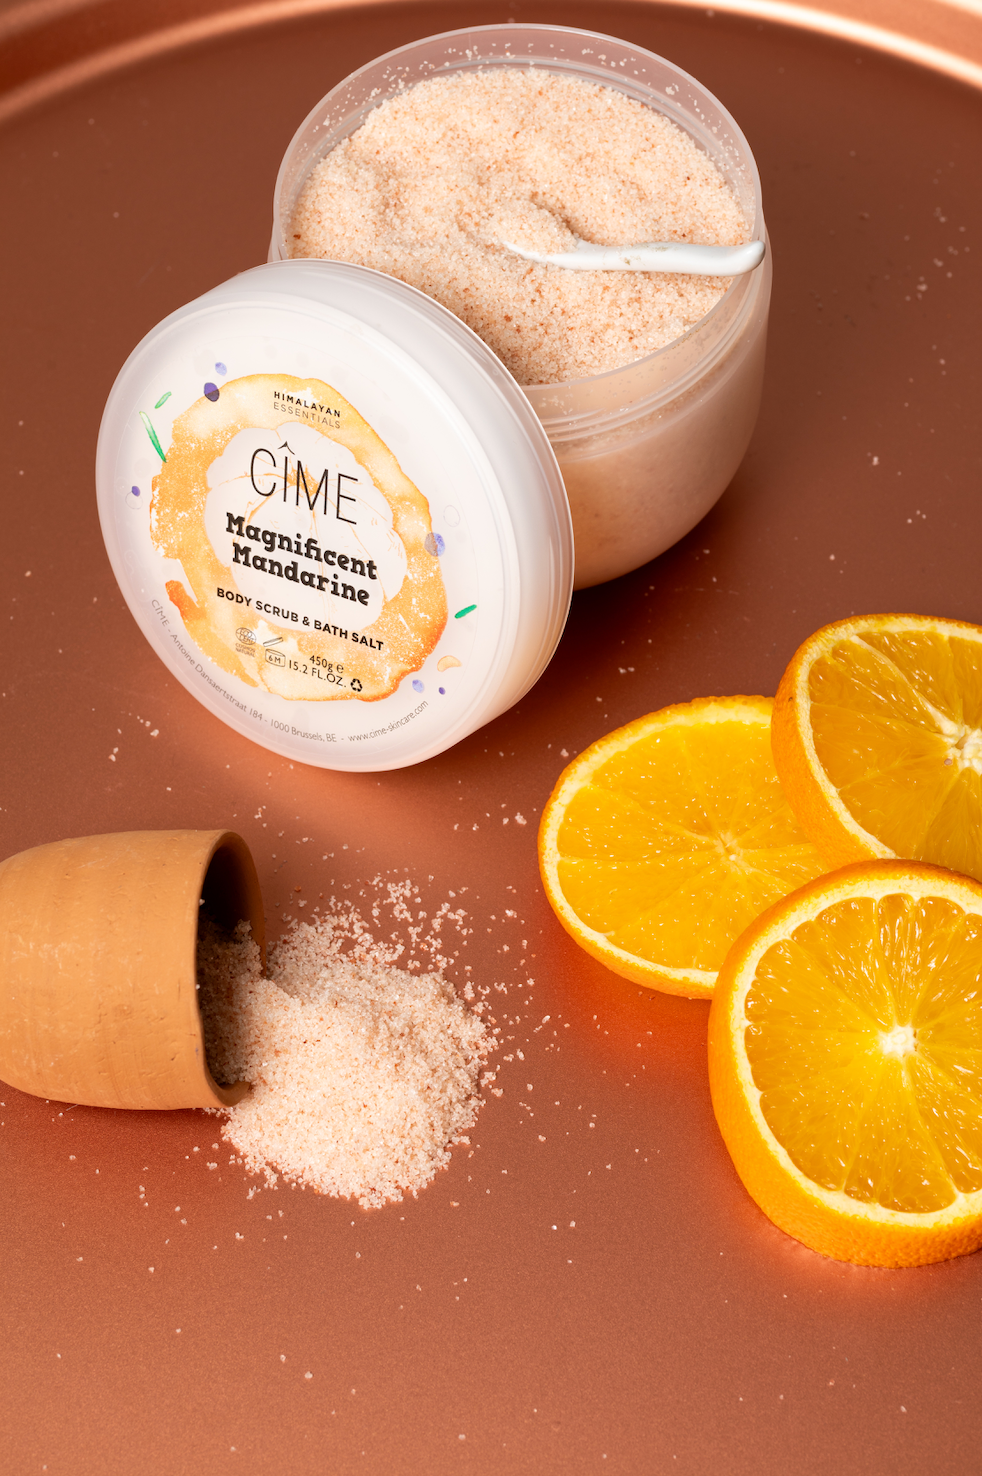 Magnificent Mandarine | Body scrub & bath salt